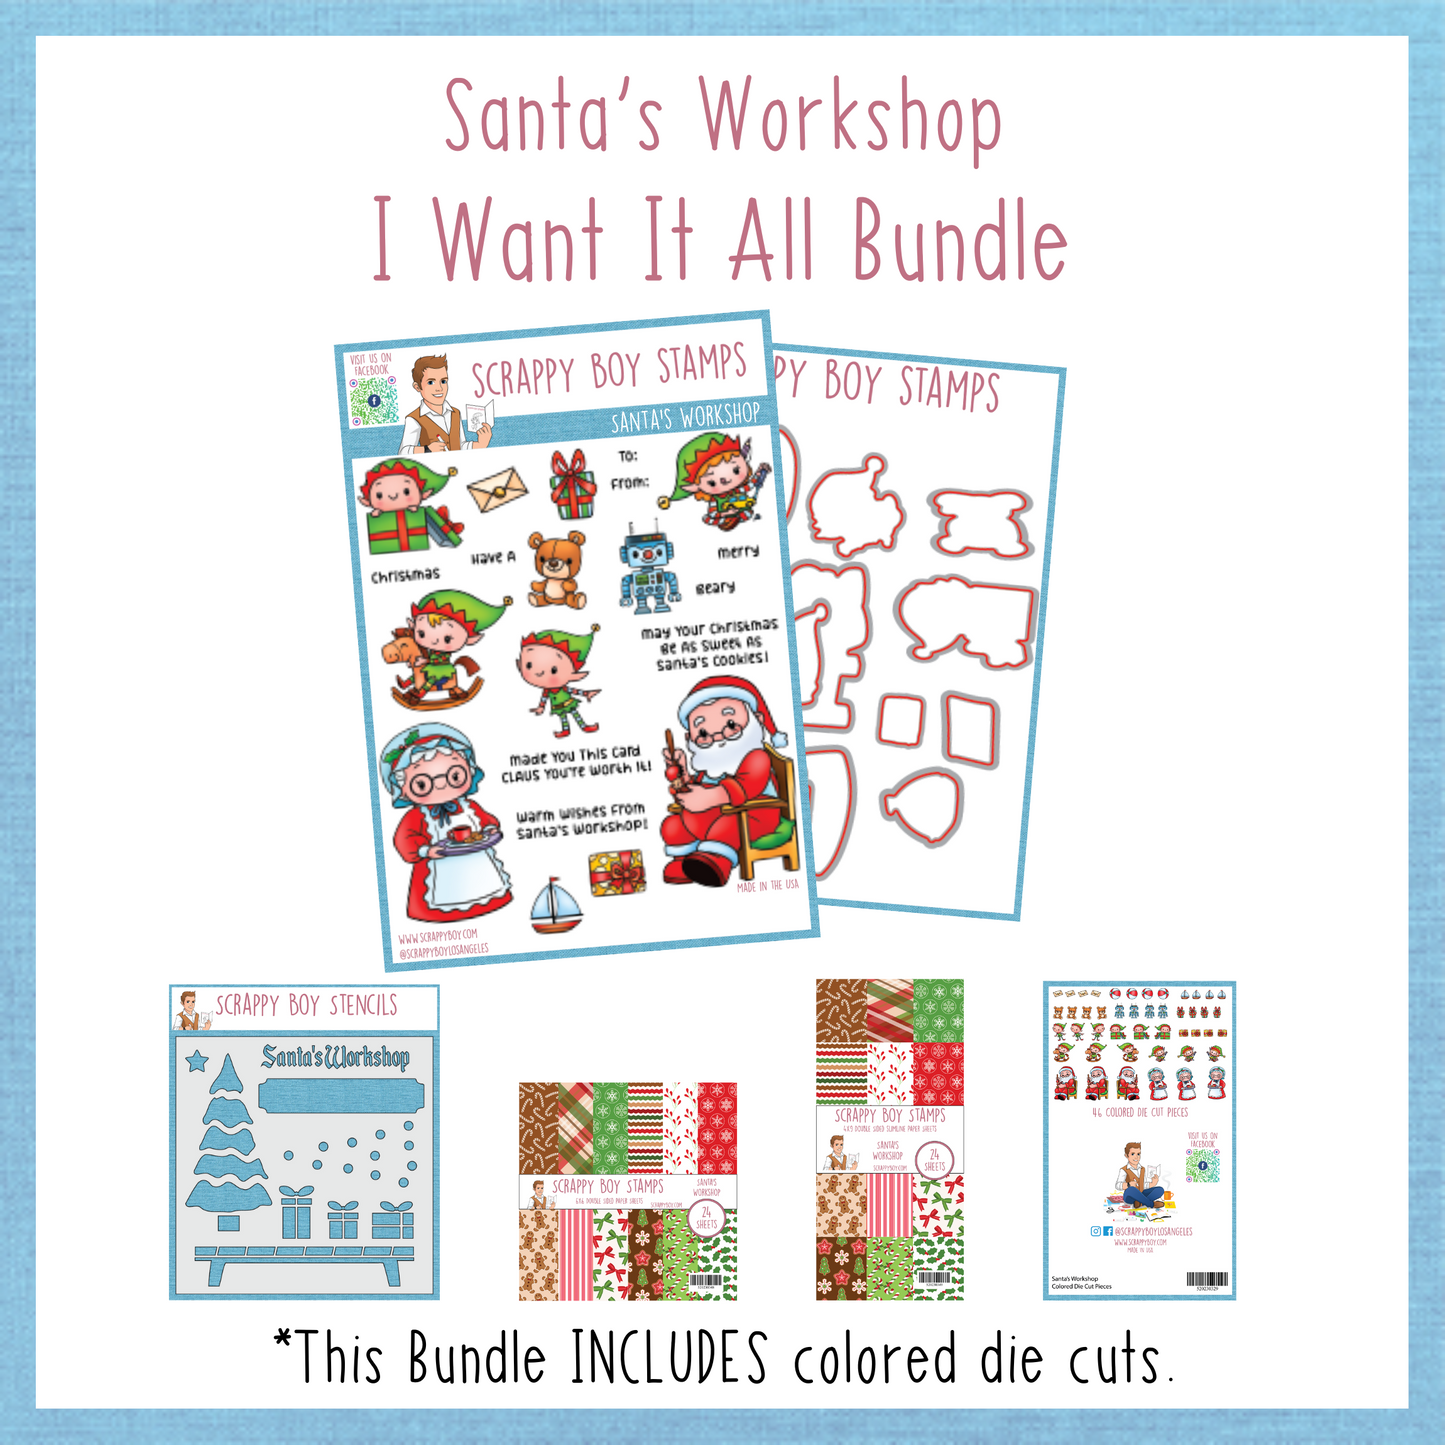 I Want It All Bundle - Santa's Workshop Release Scrappy Boy Stamps